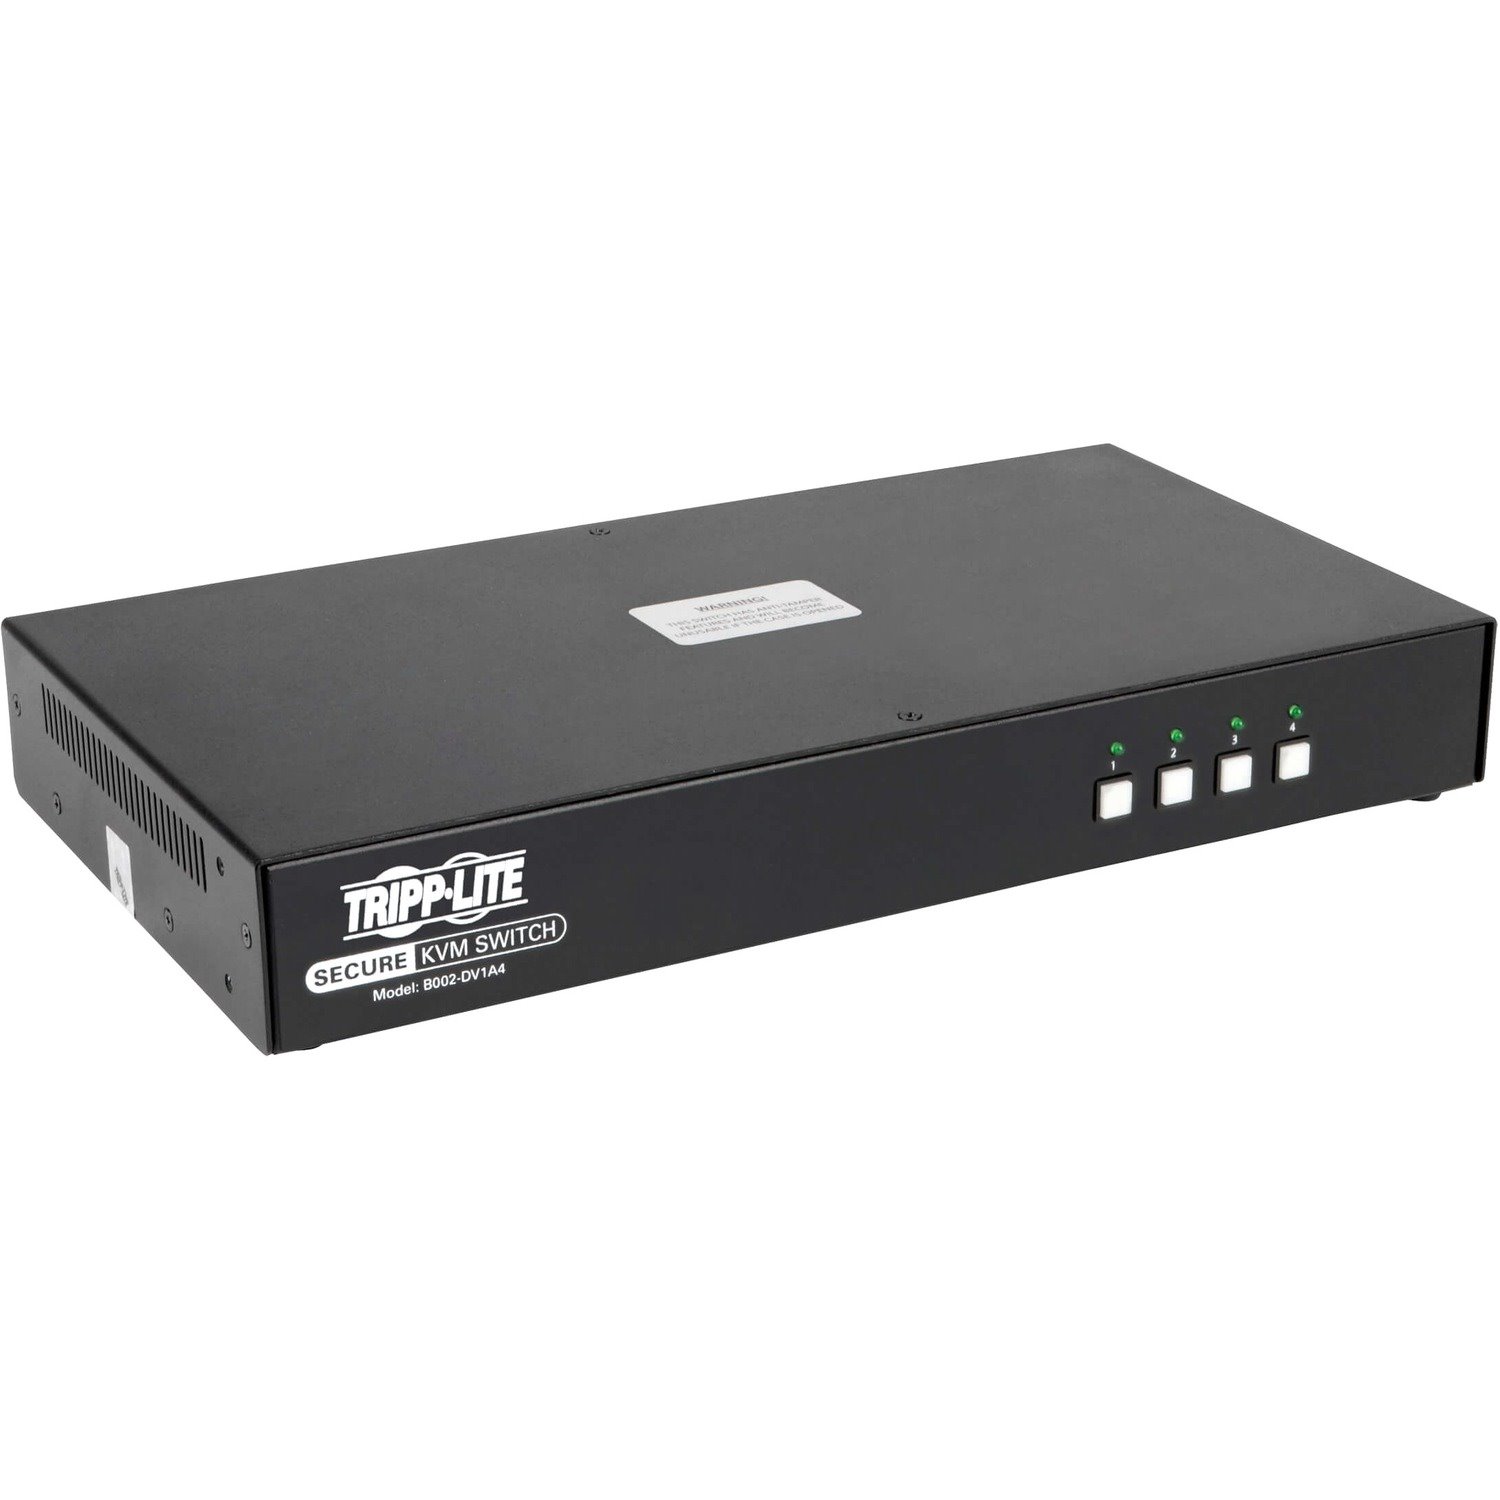 Tripp Lite Secure KVM Switch 4-Port DVI + Audio NIAP PP3.0 Certified DVI-I